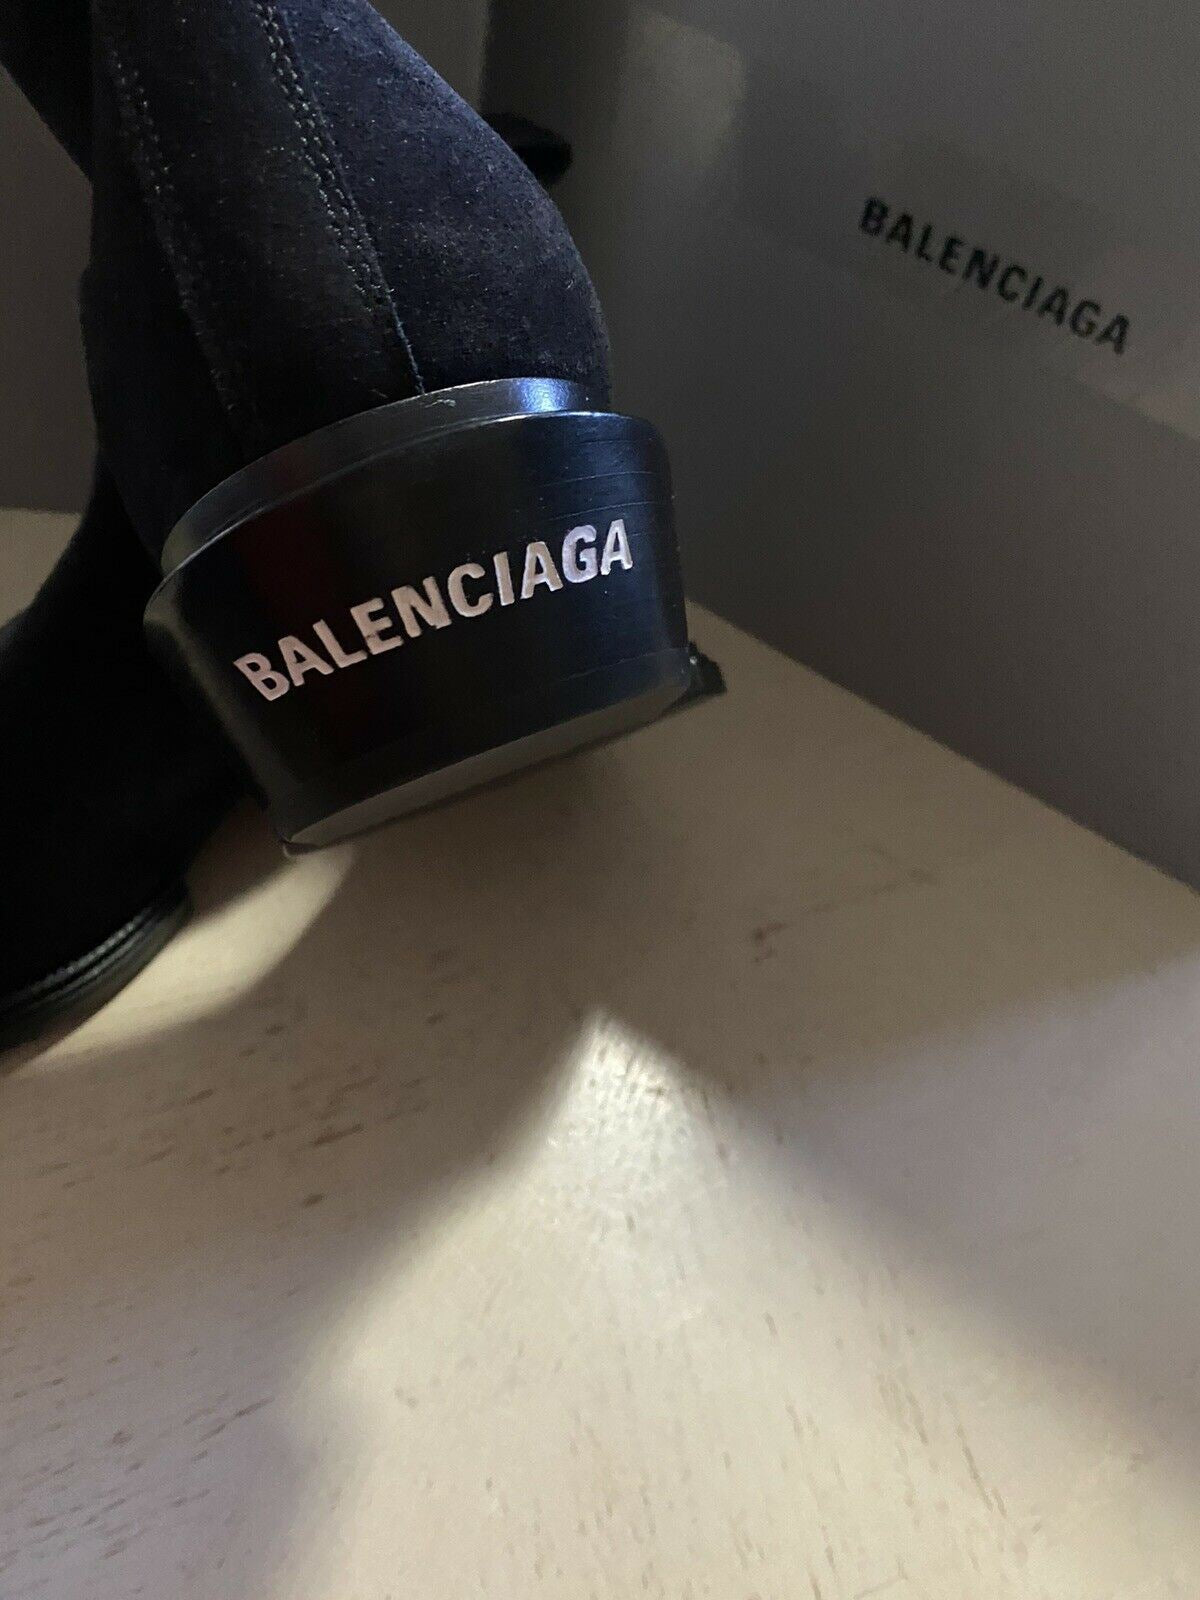 New $1090 Balenciaga Men Santing Suede Western Boot Shoes Black 10 US/43 Eu Ita